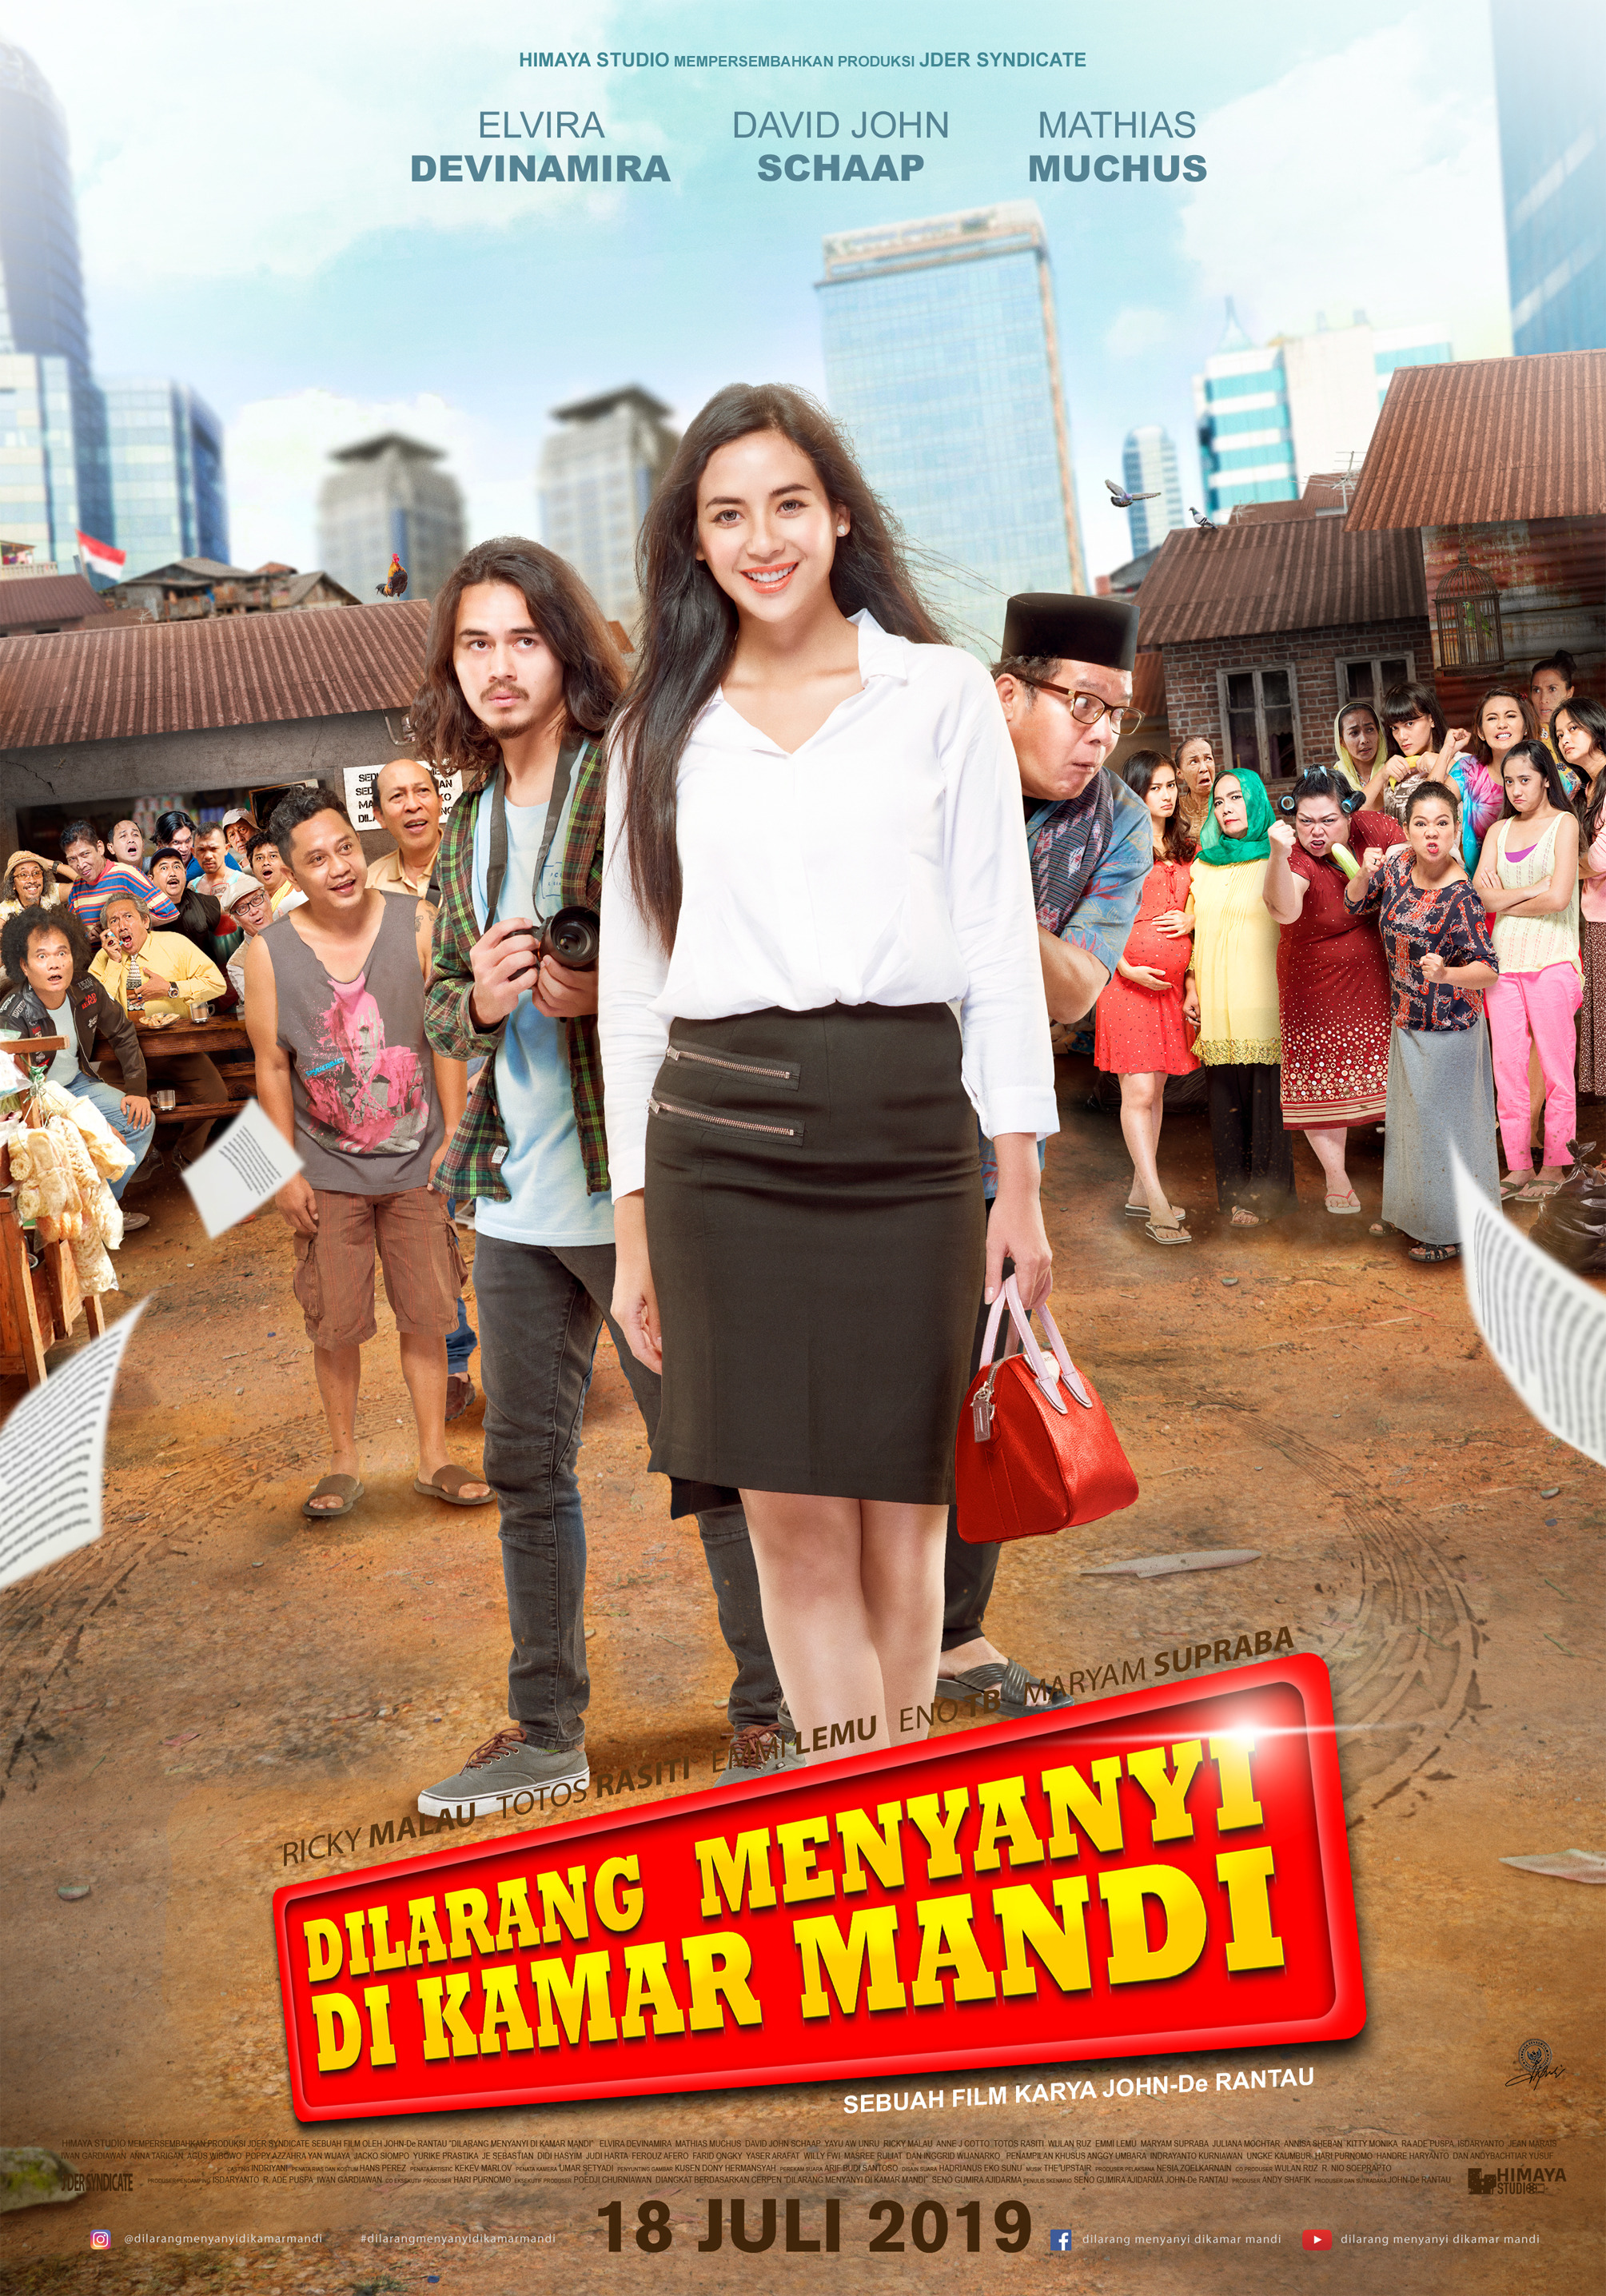 Mega Sized Movie Poster Image for Dilarang Menyanyi di Kamar Mandi (#2 of 2)